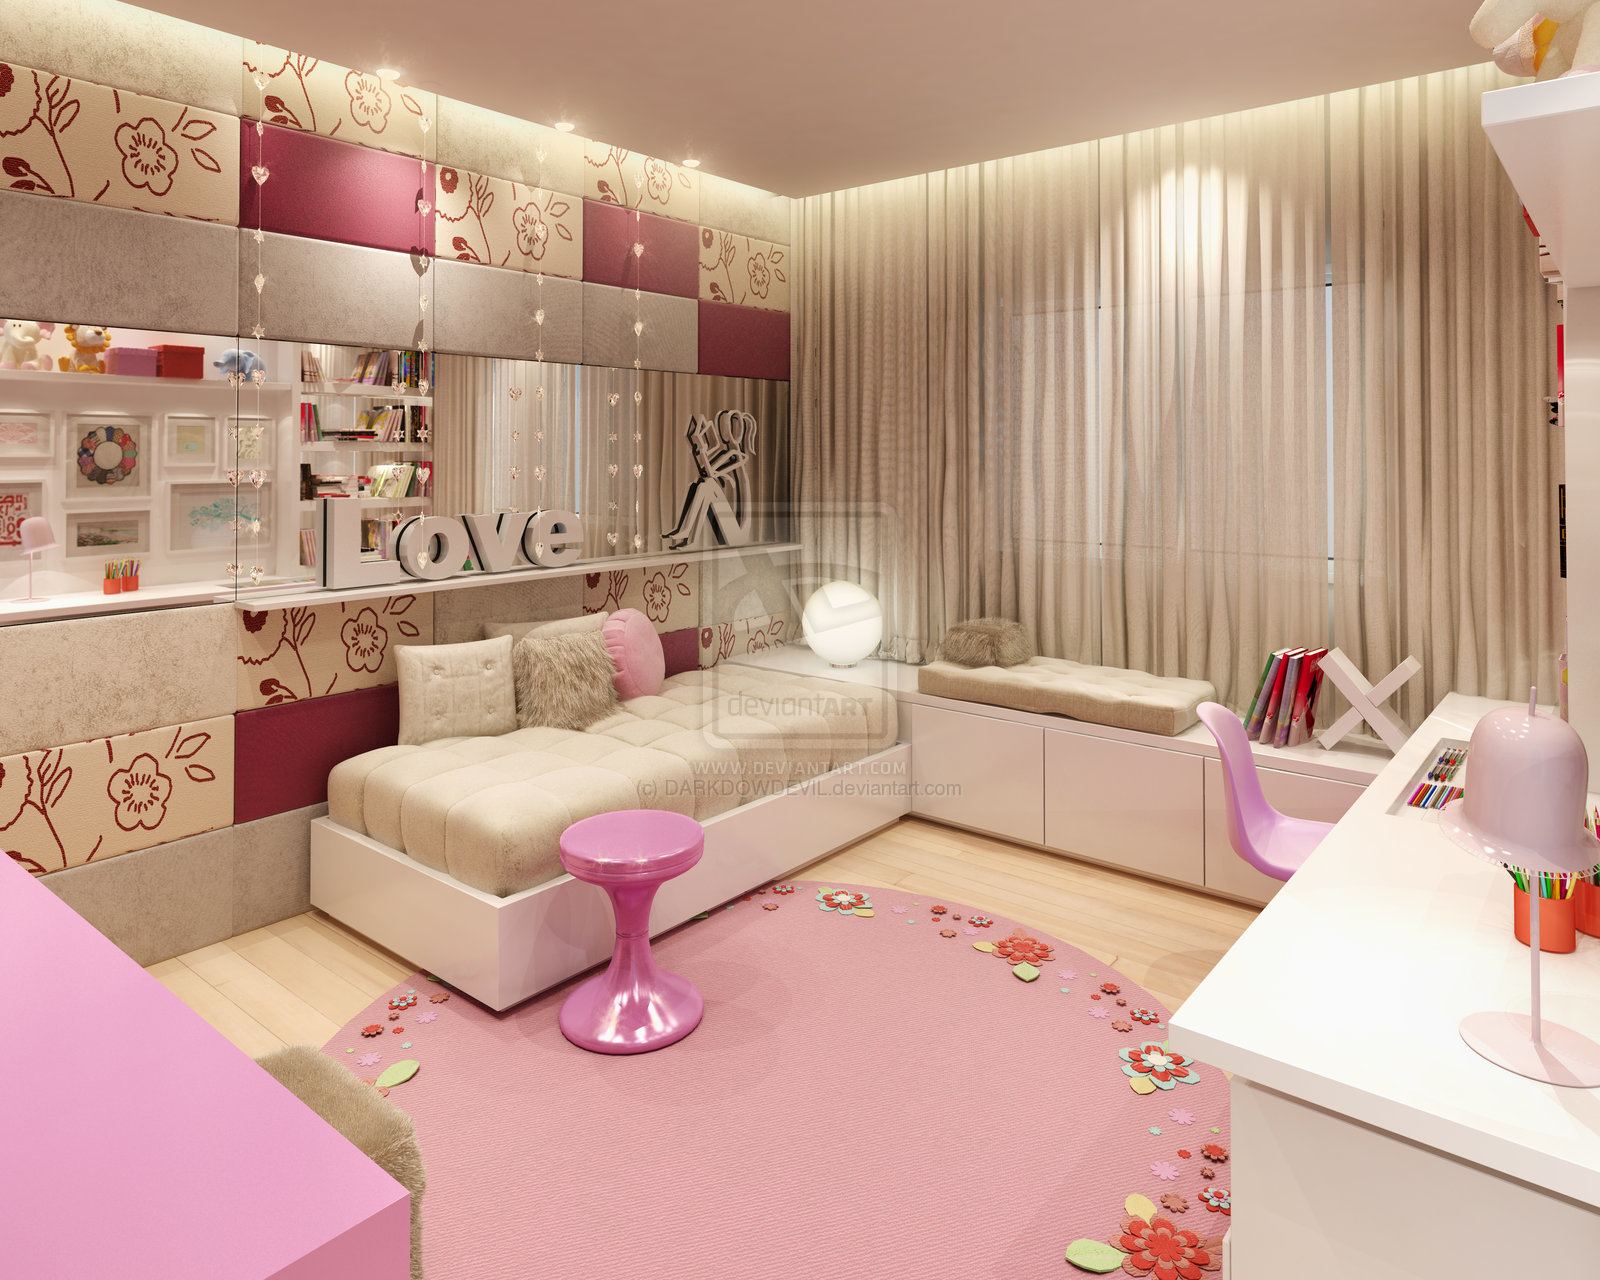 cool teenage hangout room ideas basement for girls teen best carpet family  furniture living decorating